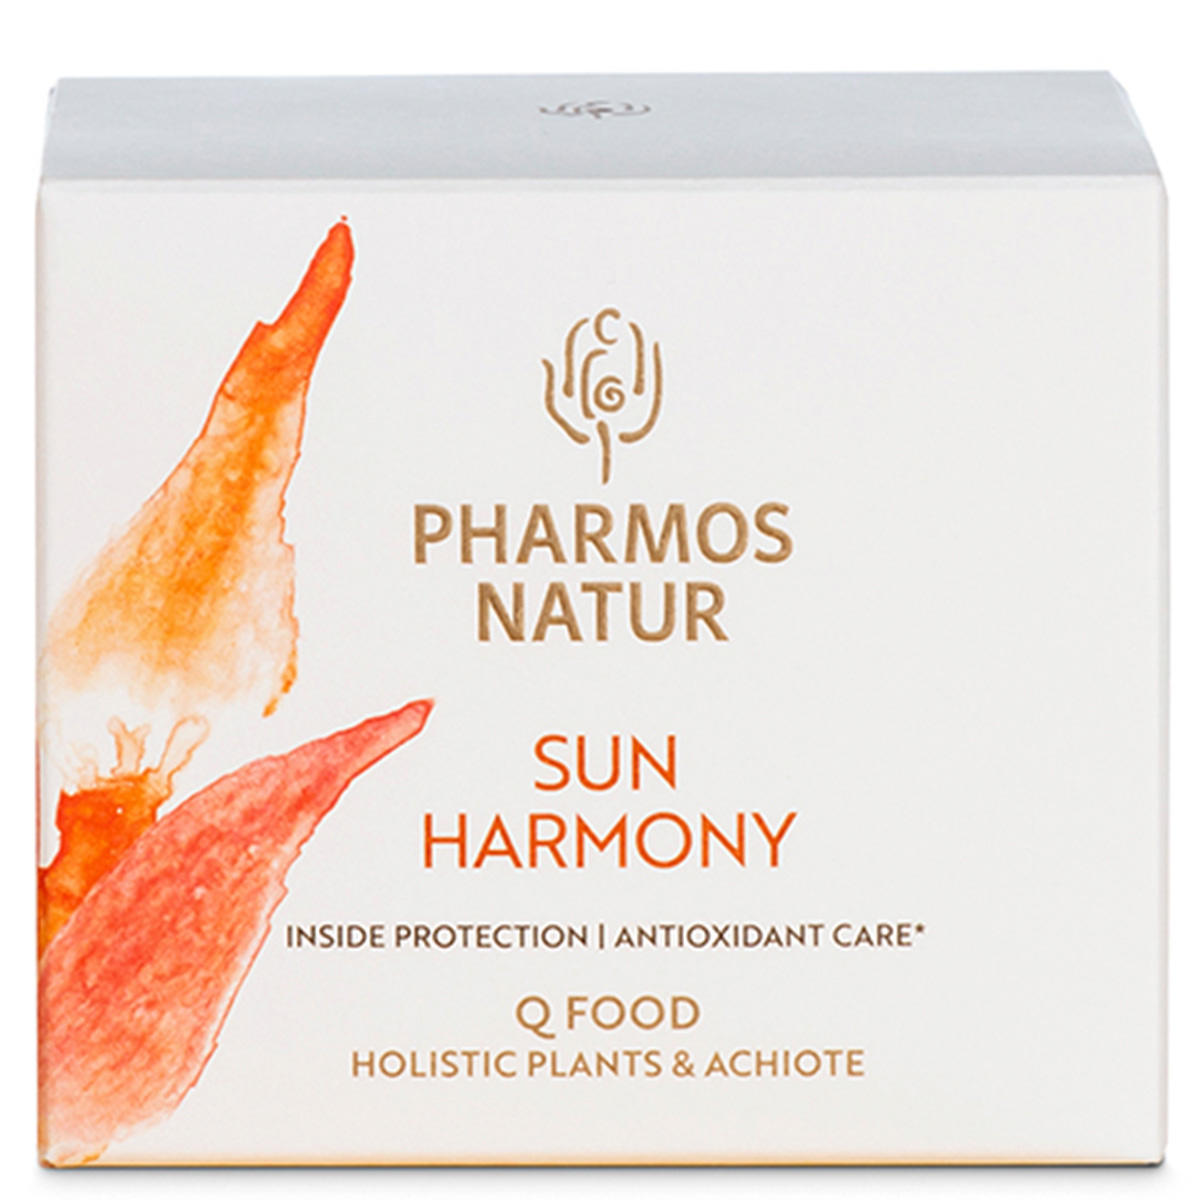 PHARMOS NATUR Sun Harmony Bio Q-Food 50 g - 3